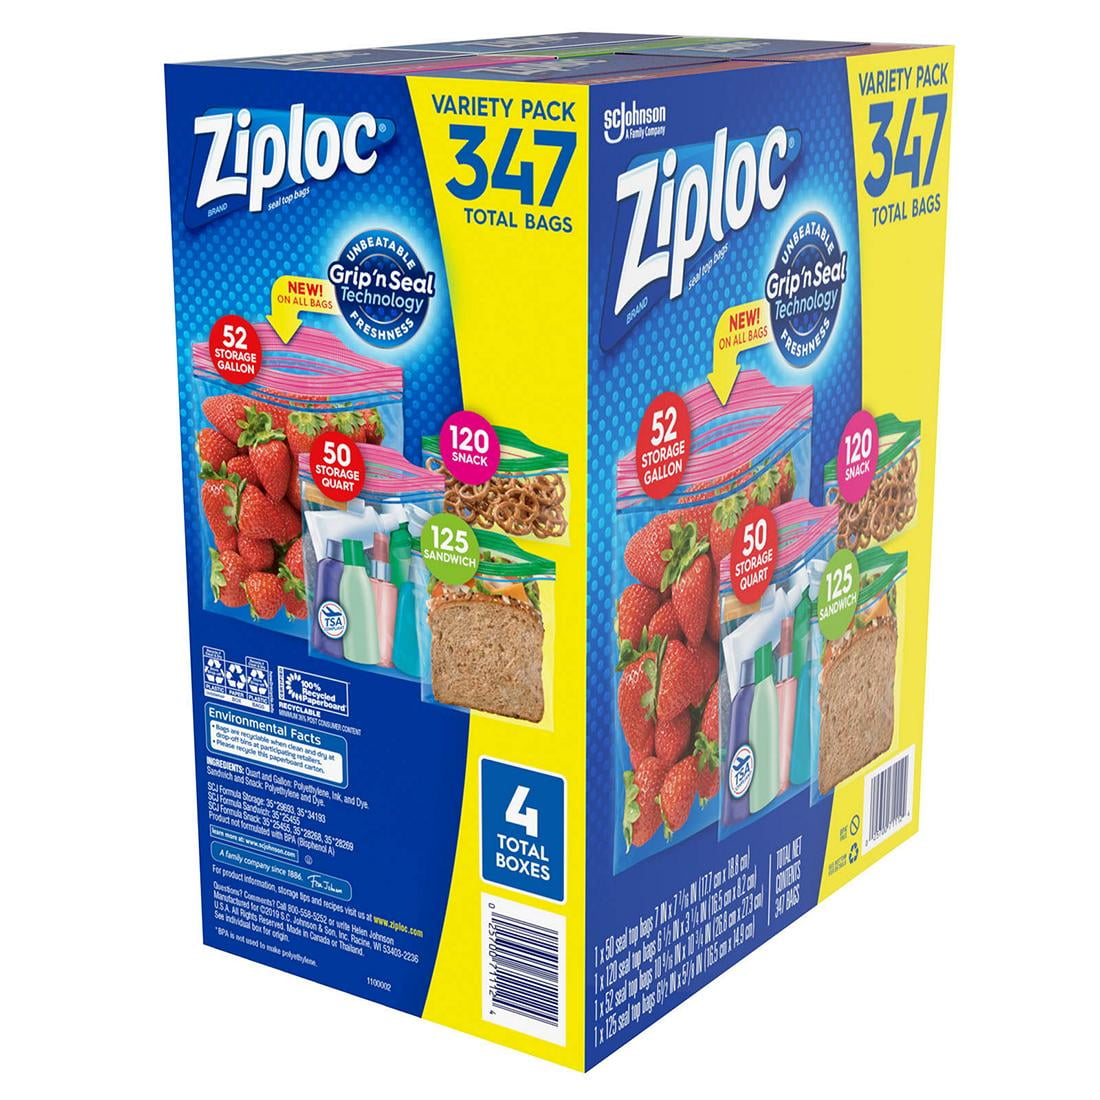 Ziploc Storage Bag Variety Pack, 347 pk. 